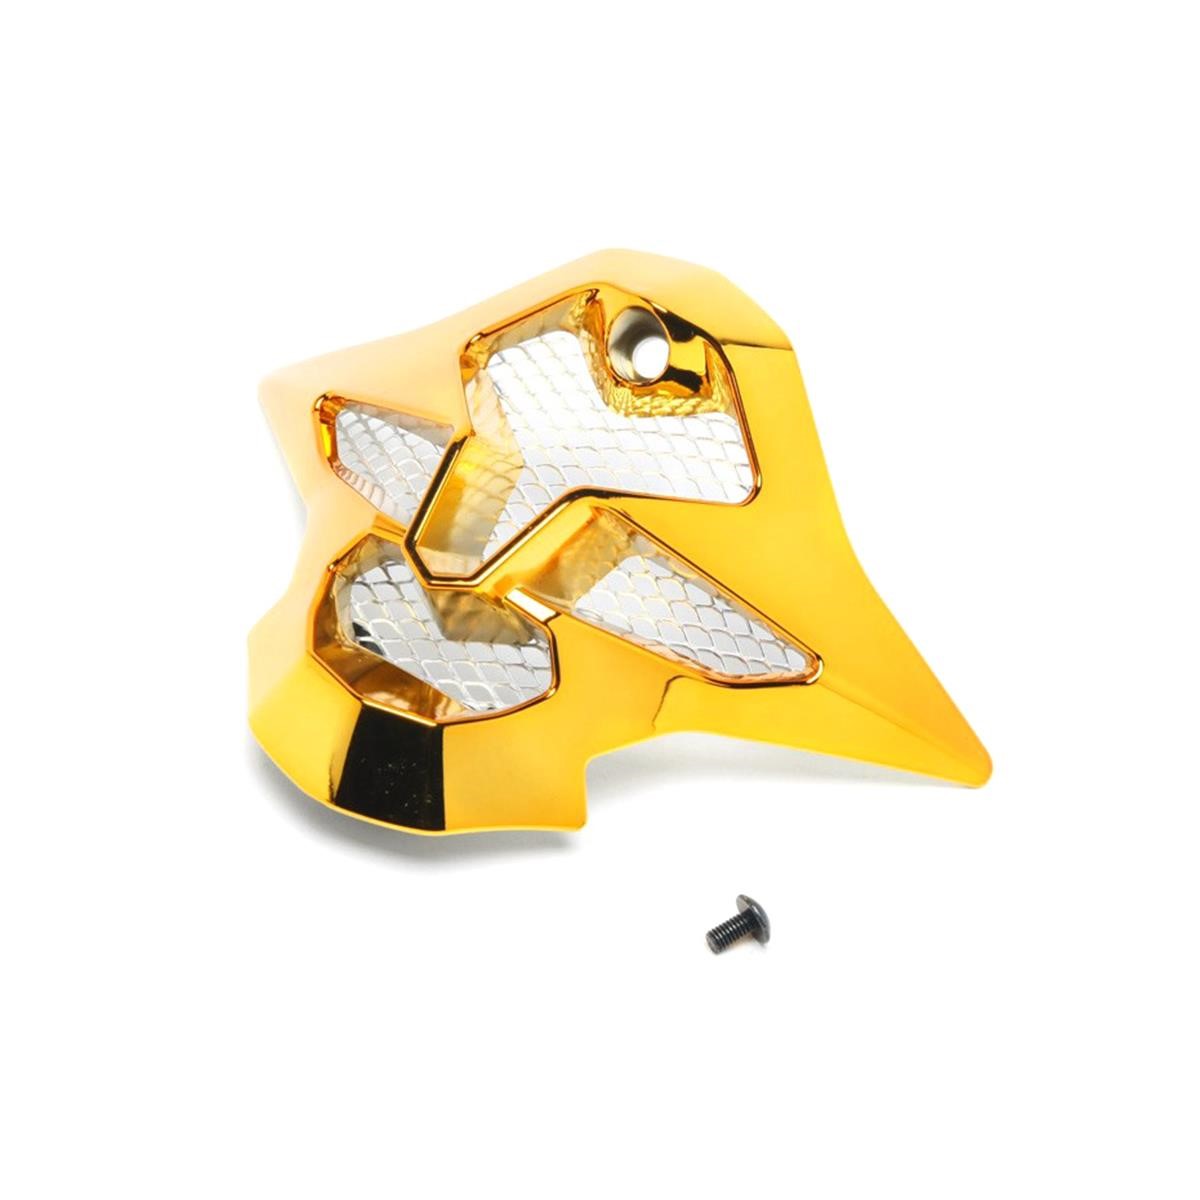 Shoei Replacement Mouthpiece VFX-W Chrome Gold